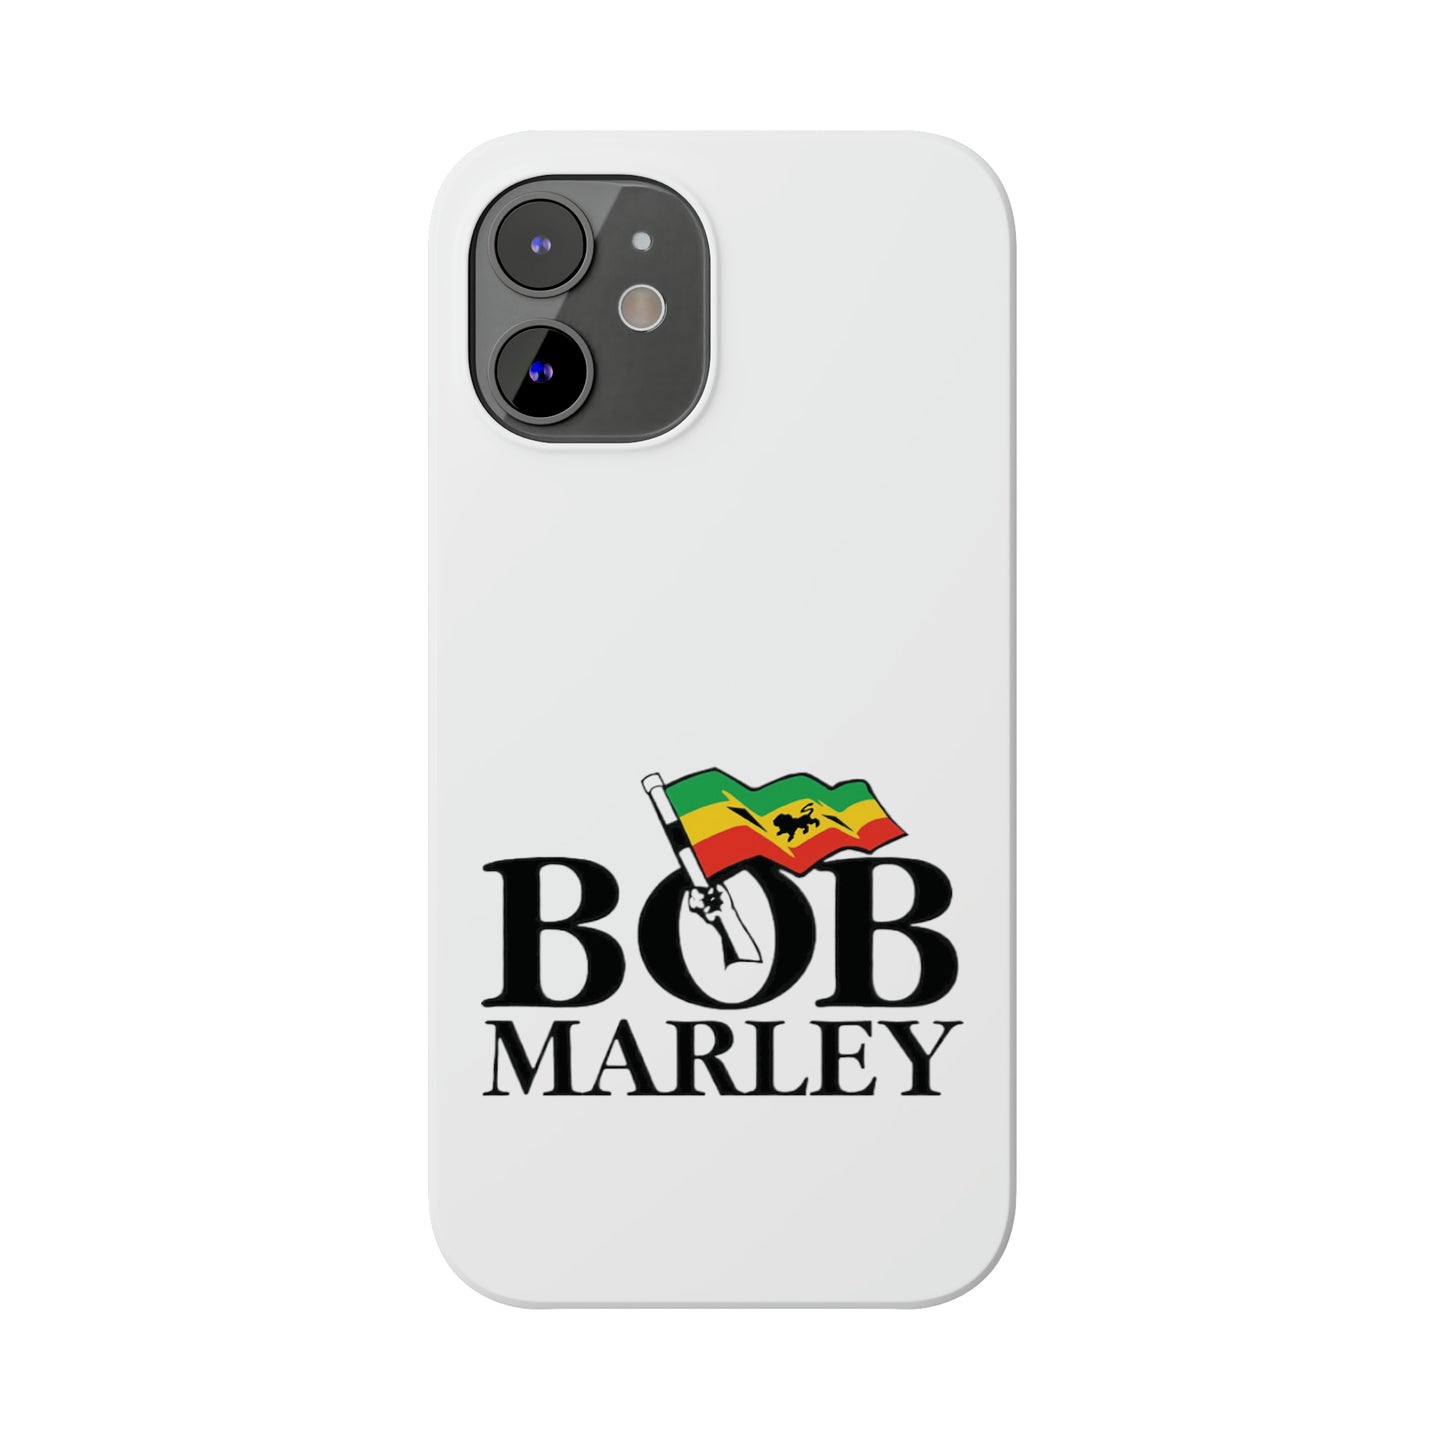 Bob Marley Flexible Super-Slim iPhone Case